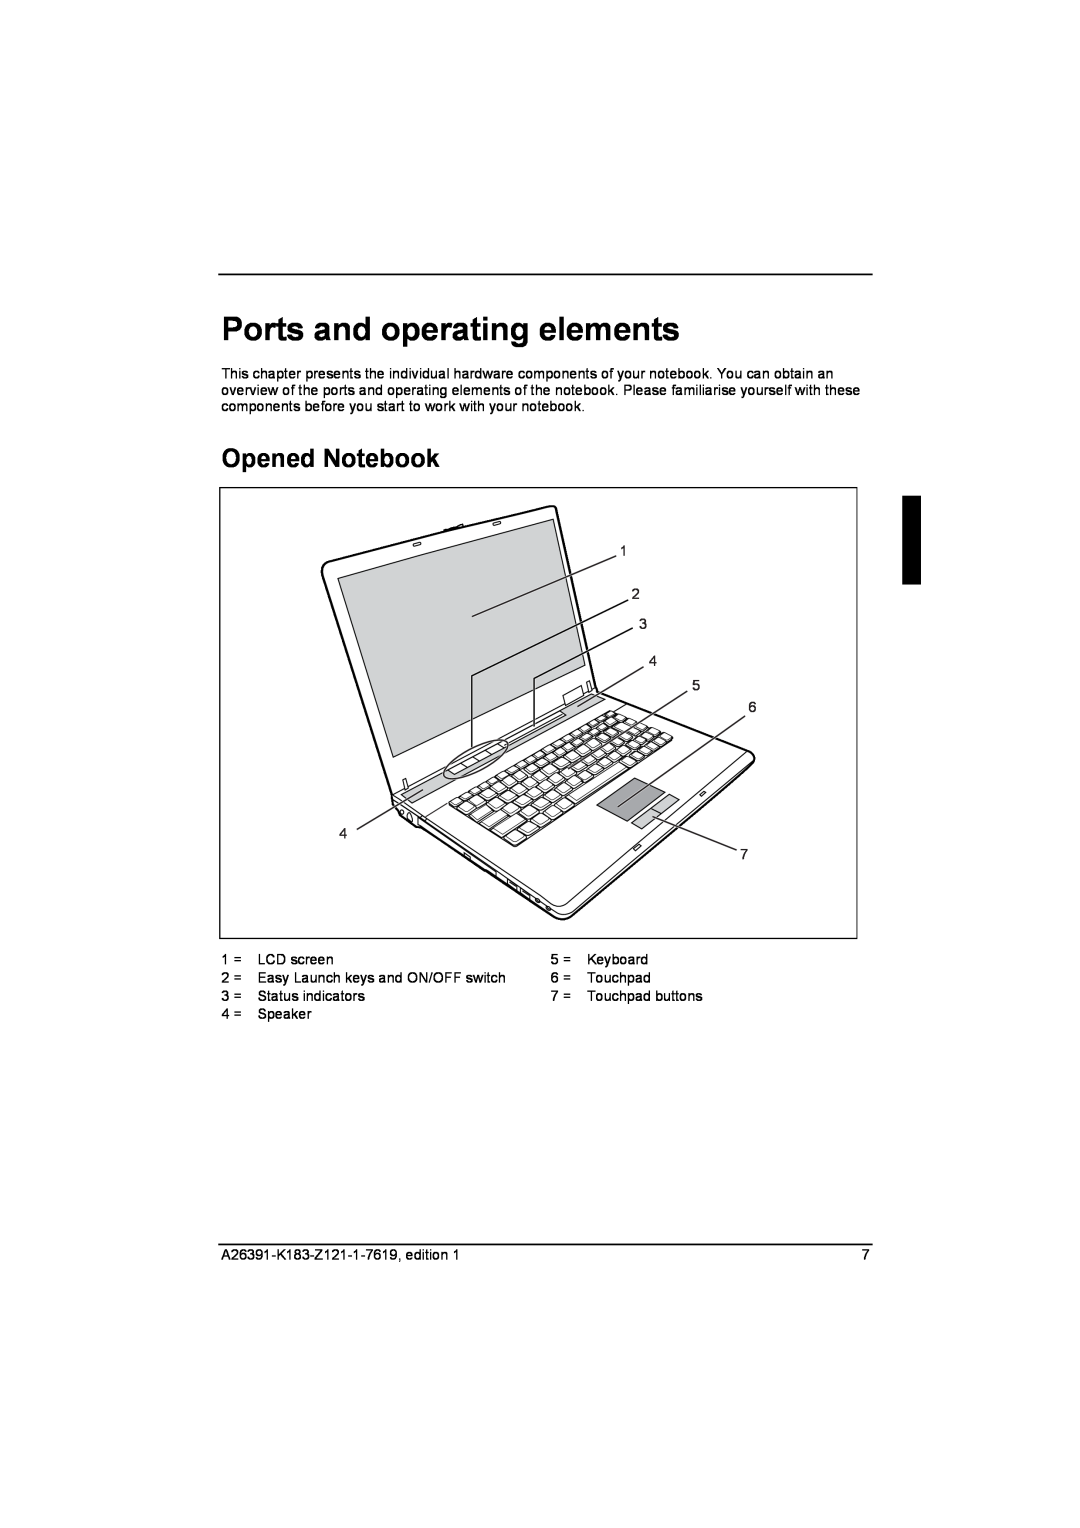 Fujitsu Siemens Computers V2035 manual Ports and operating elements, Opened Notebook 